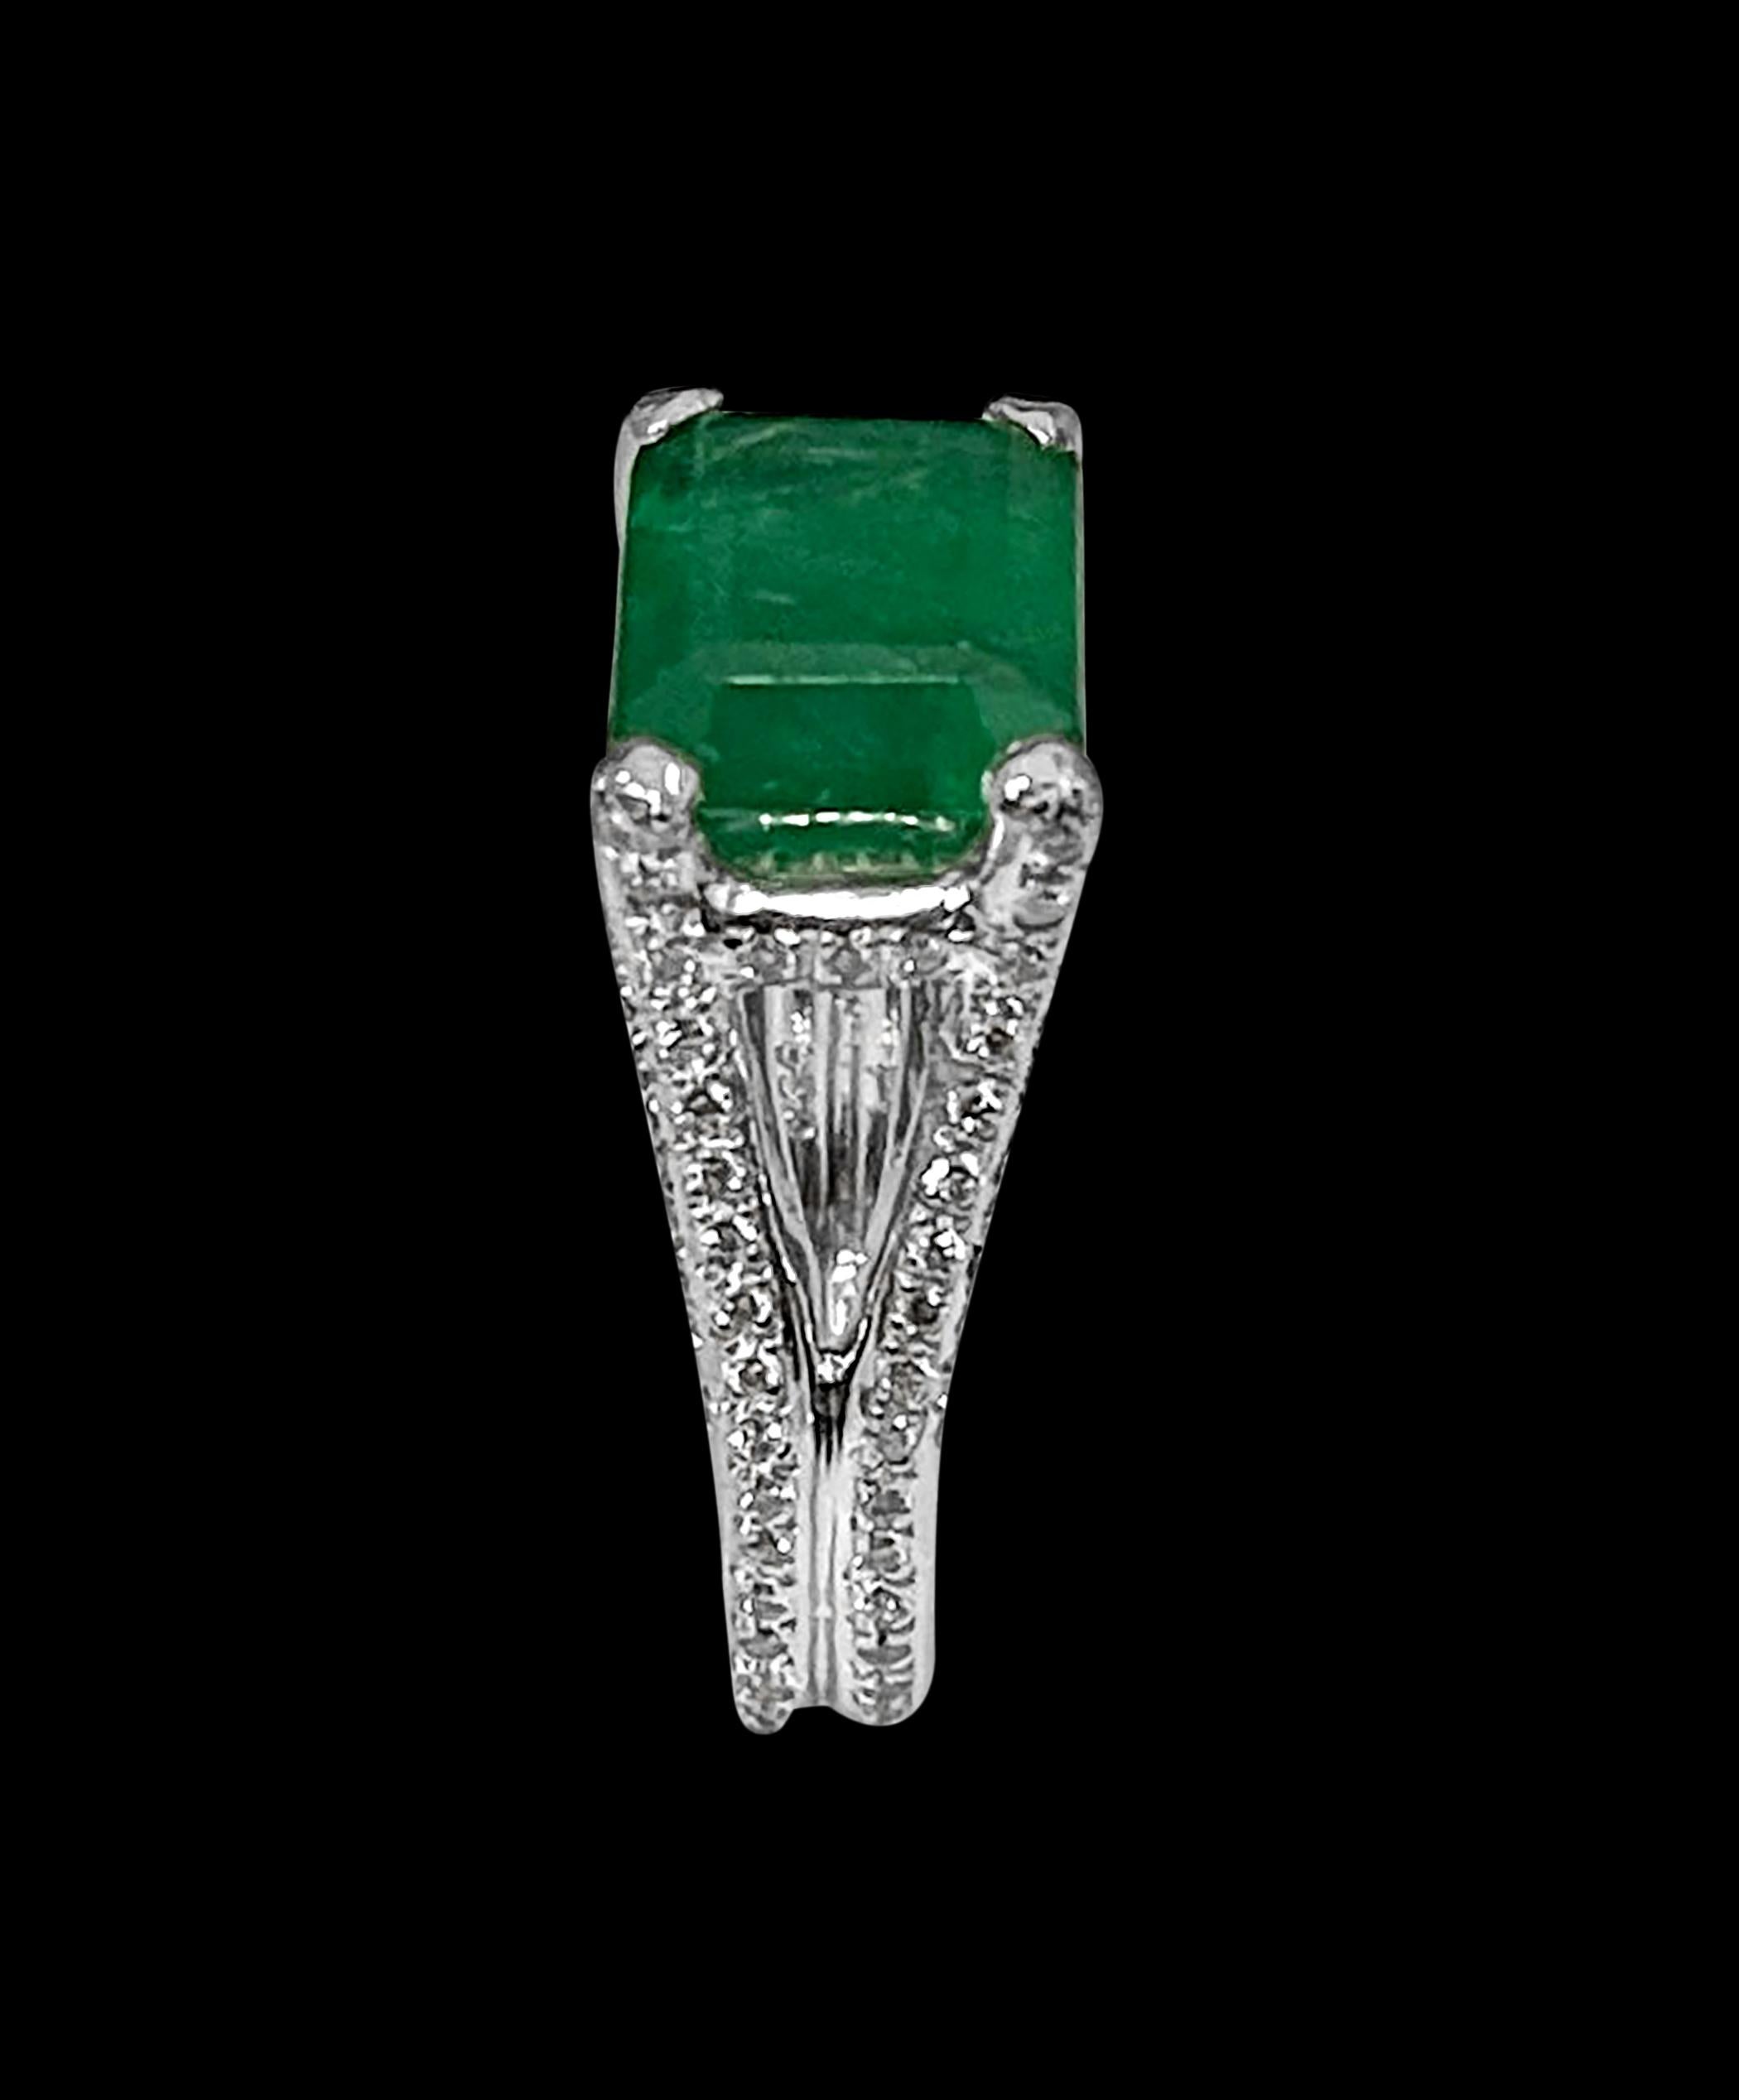 8.5 carat diamond ring